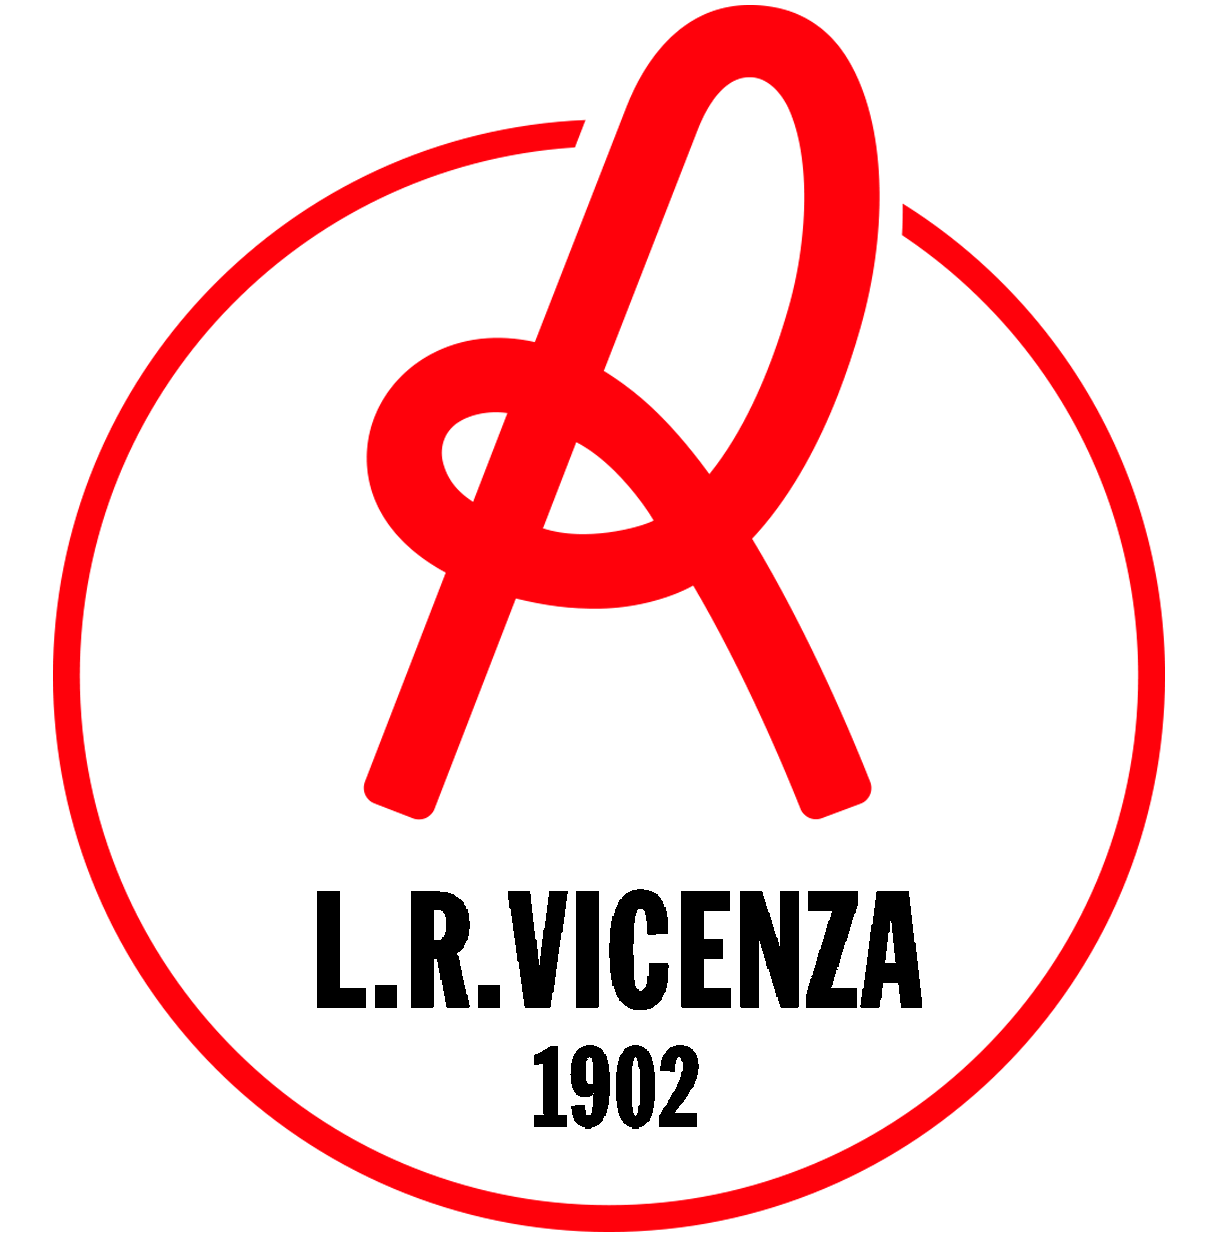 Vicenza Logo - Logo LR Vicenza Virtus (2018).png